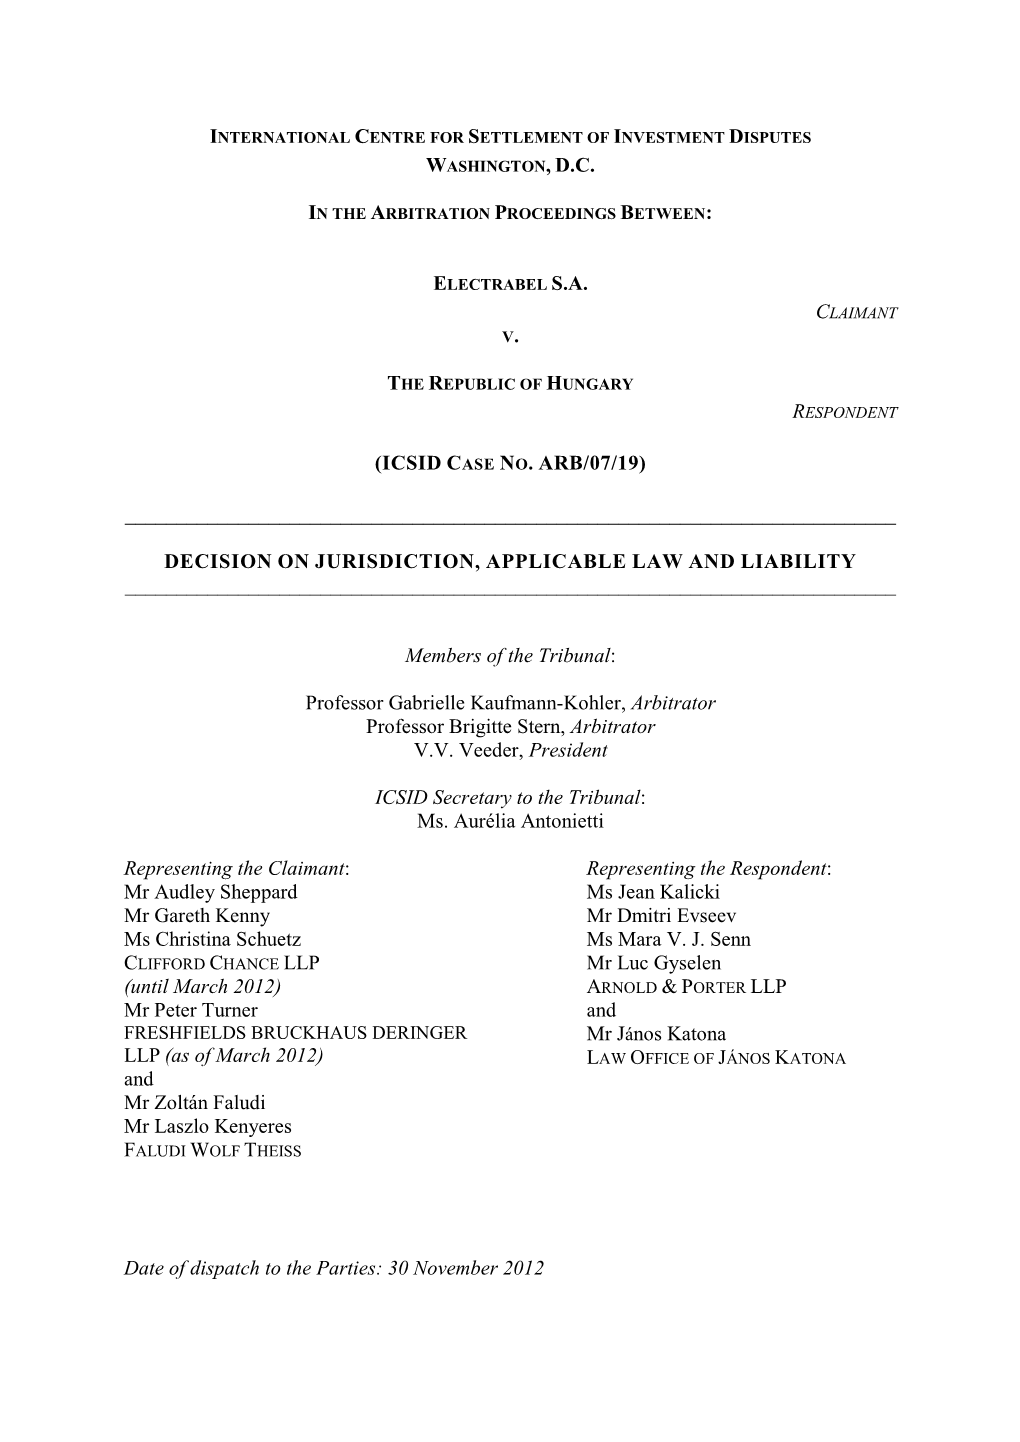 (Icsid Case No. Arb/07/19) Decision on Jurisdiction